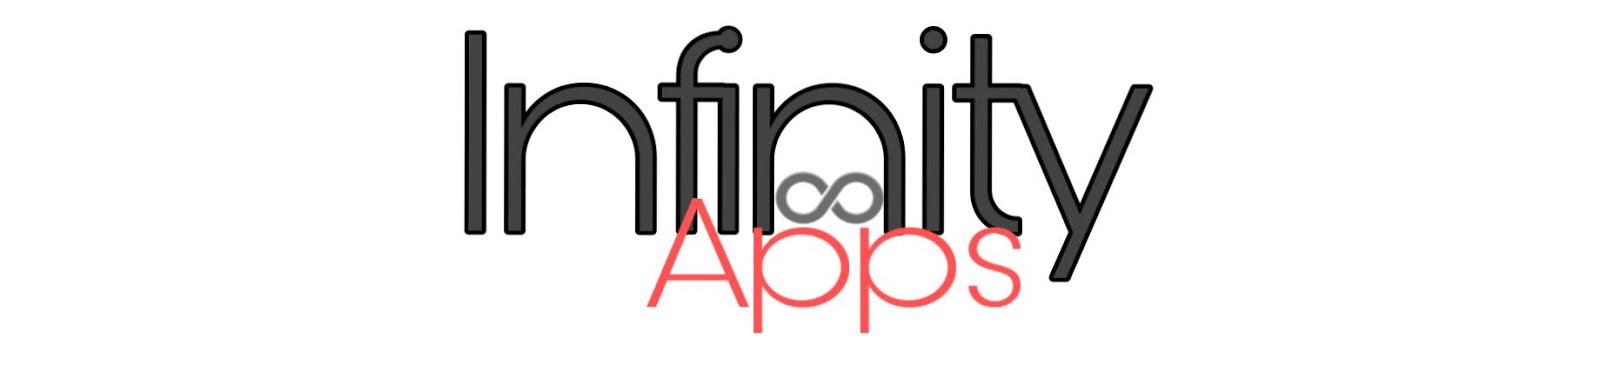 infinity apps